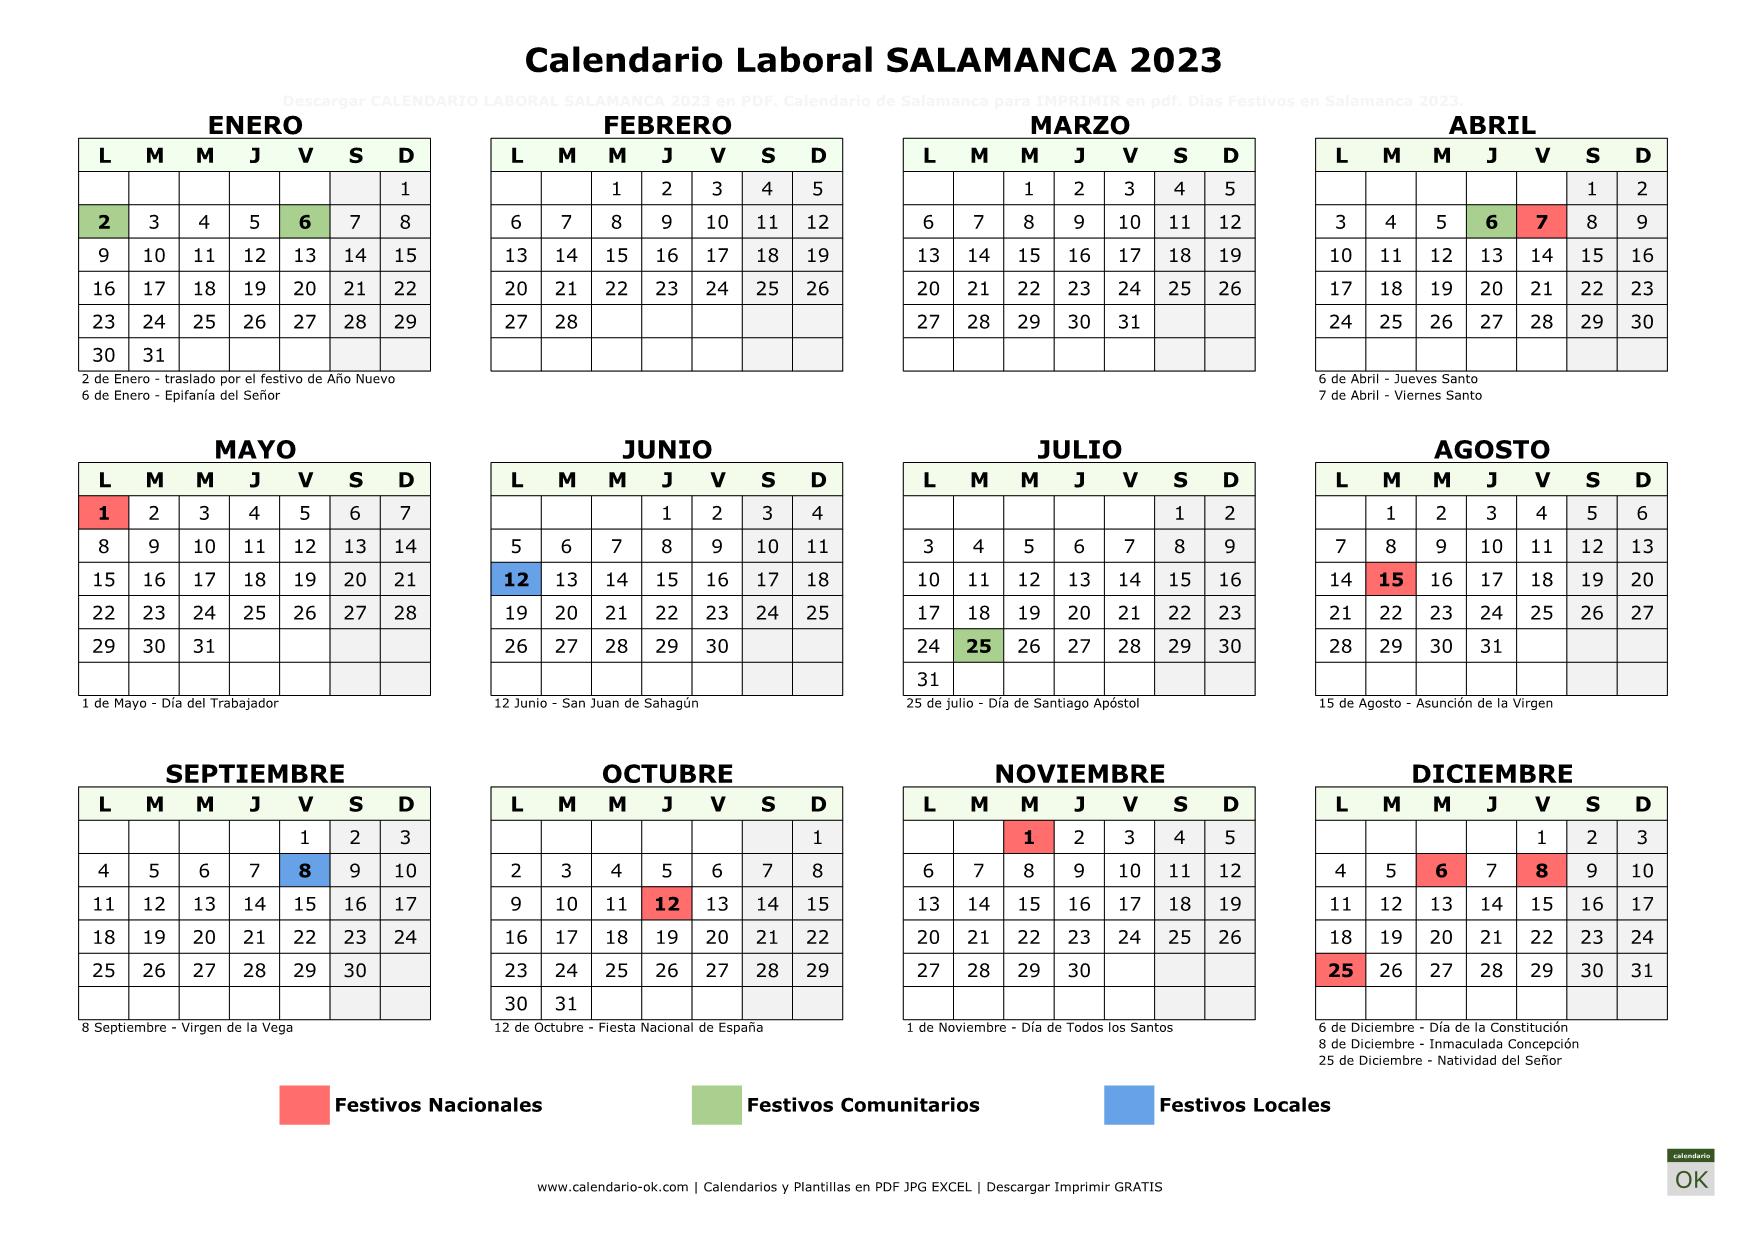 Calendario Laboral Salamanca 2023 horizontal